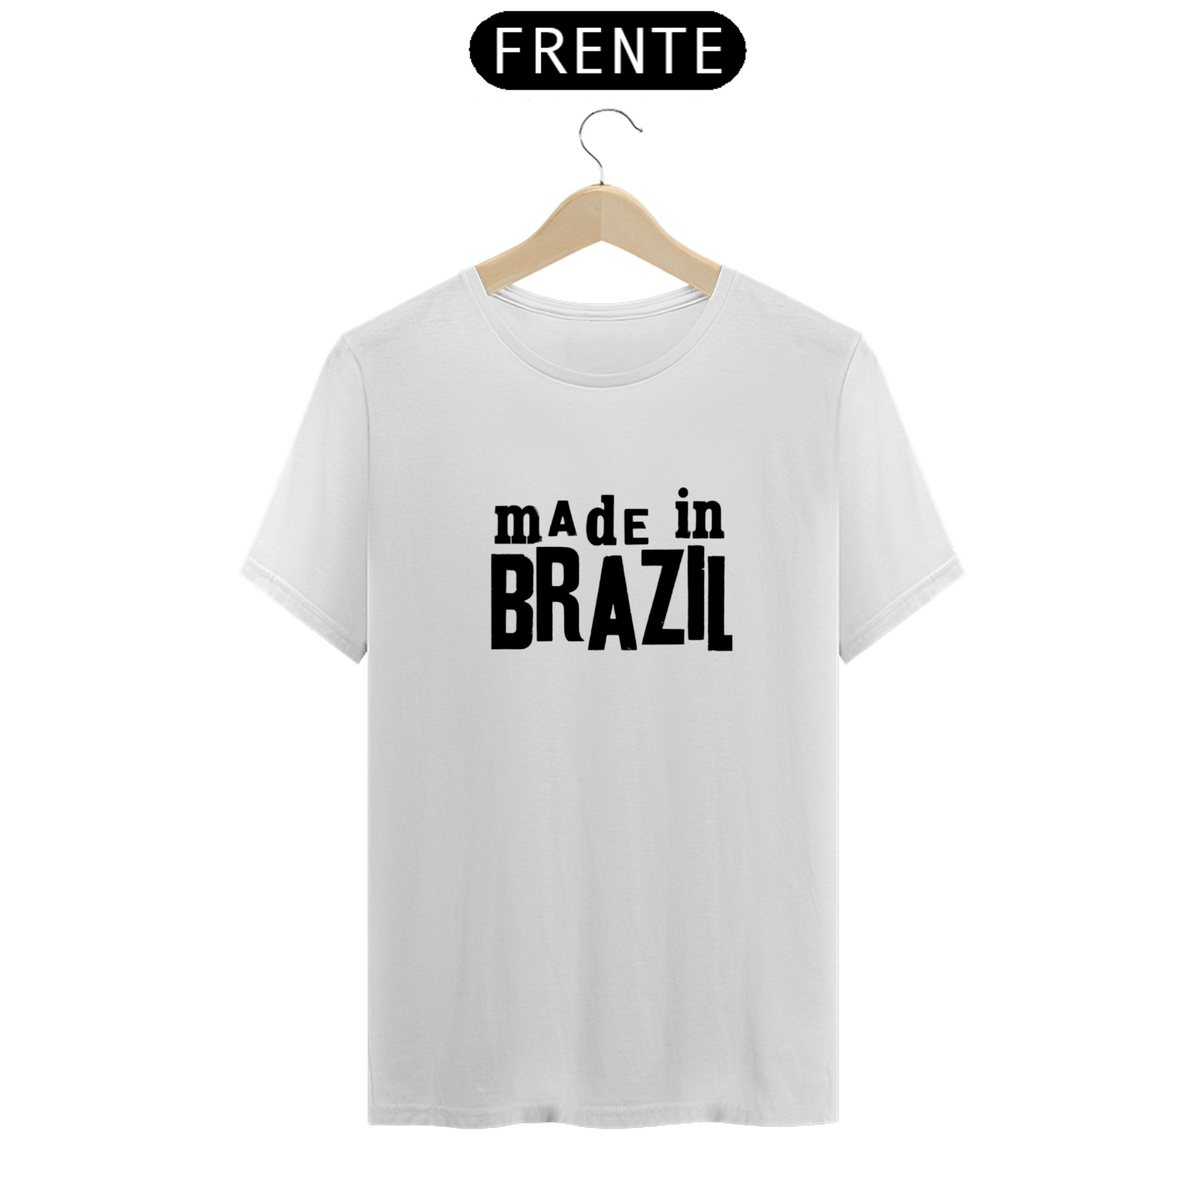 Nome do produto: Camiseta Made in Brazil